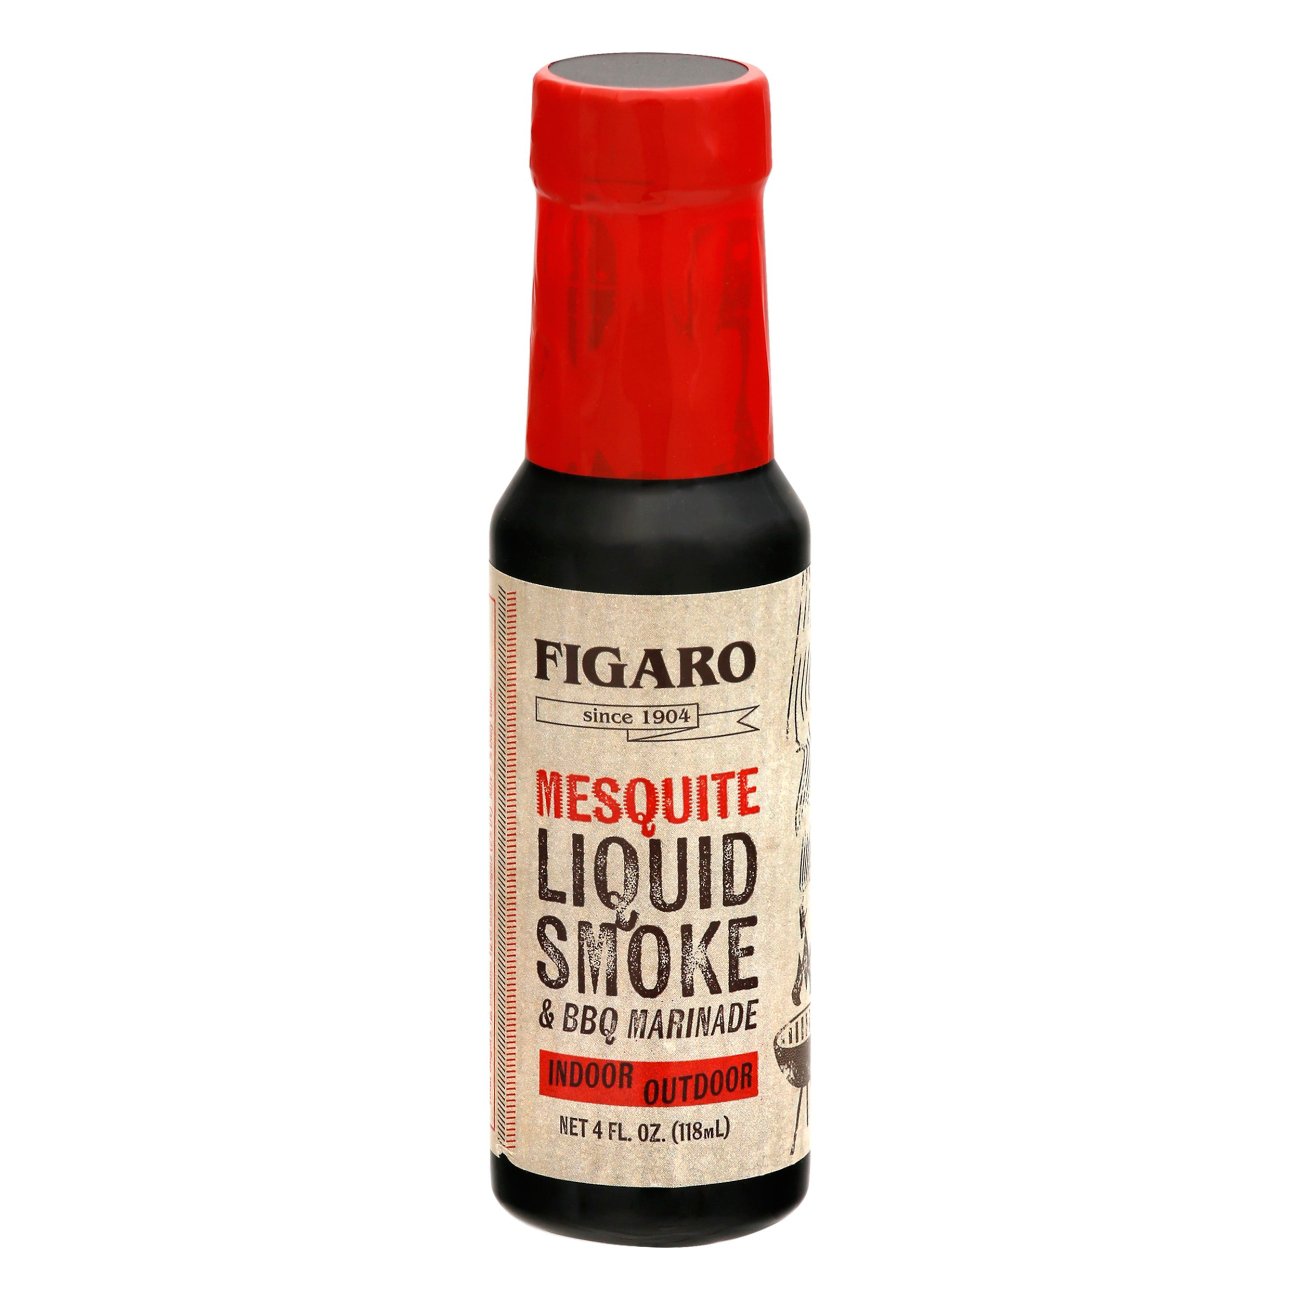 Figaro Mesquite Liquid Smoke And Marinade Shop Marinades At H E B,Fancy Rats As Pets